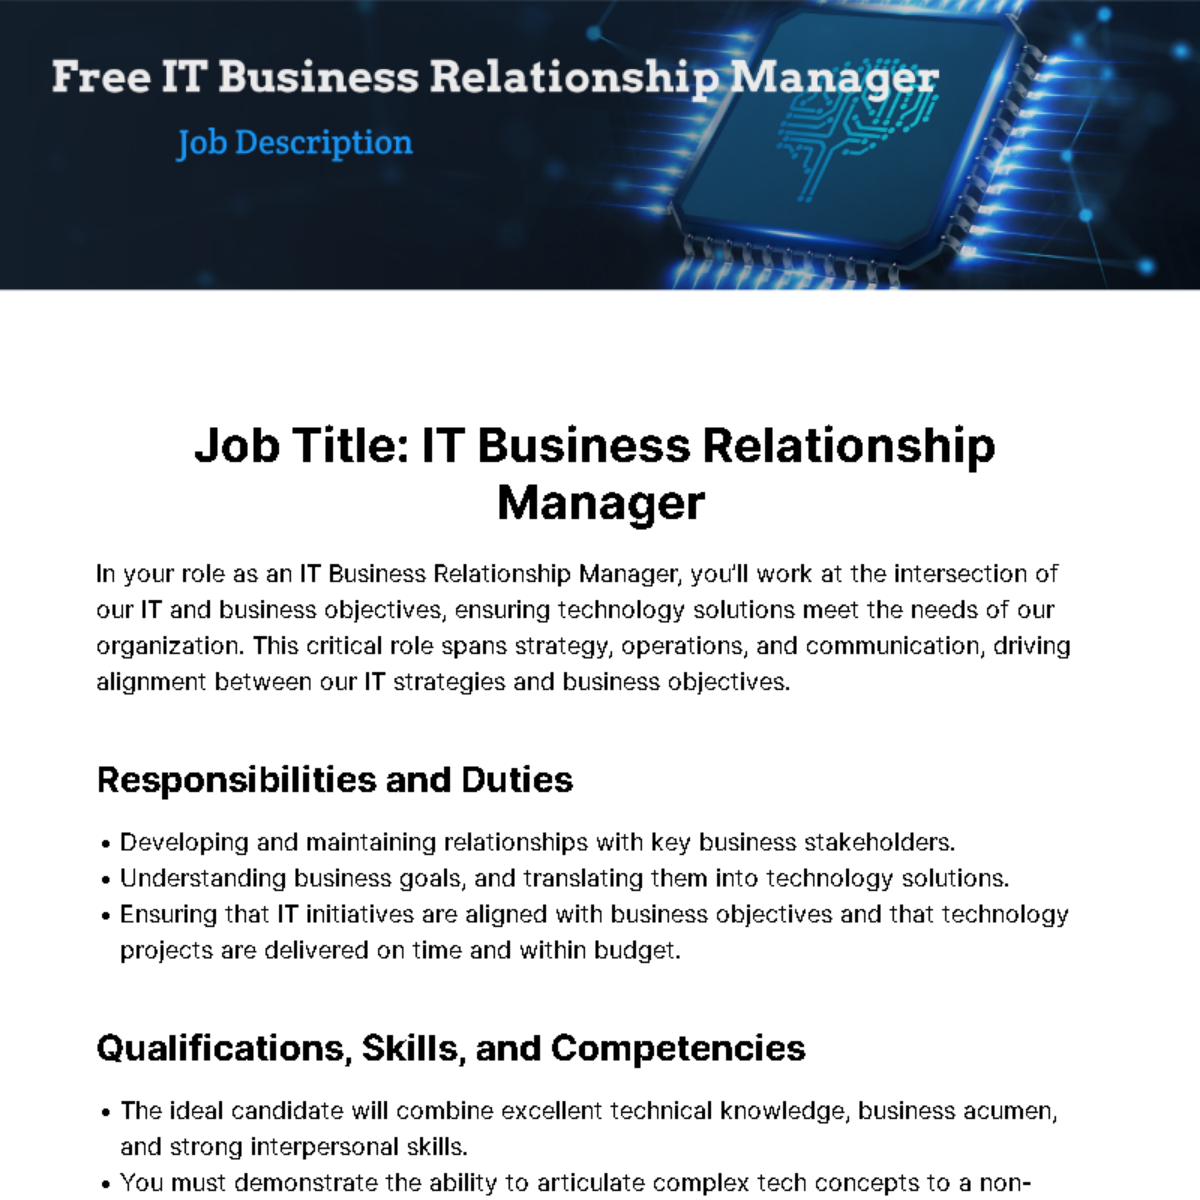 IT Business Relationship Manager Job Description Template